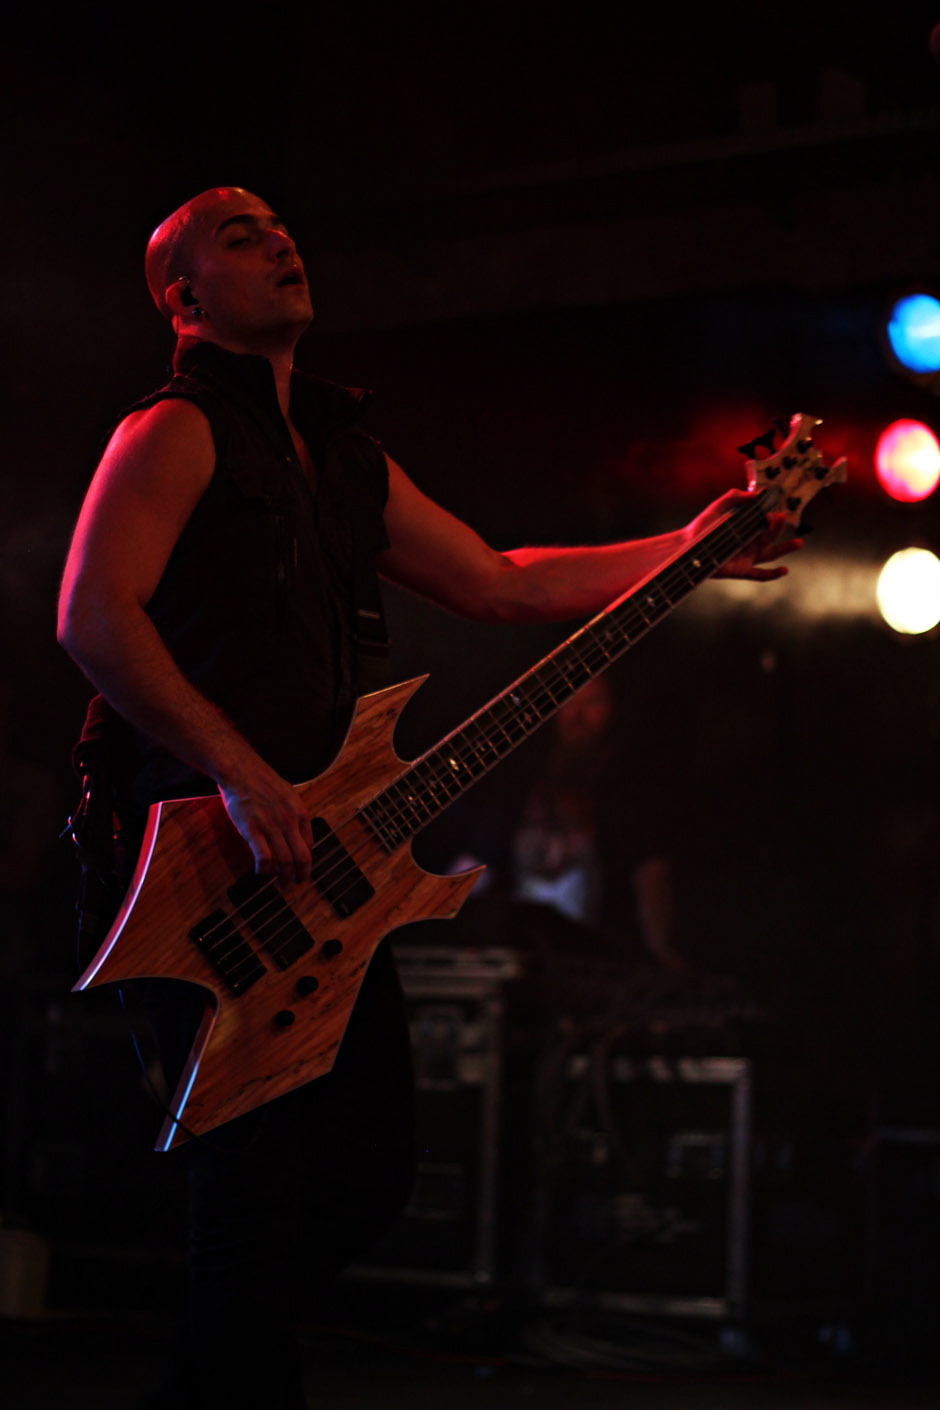 Trivium live, 06.06.2012 in Karlsruhe